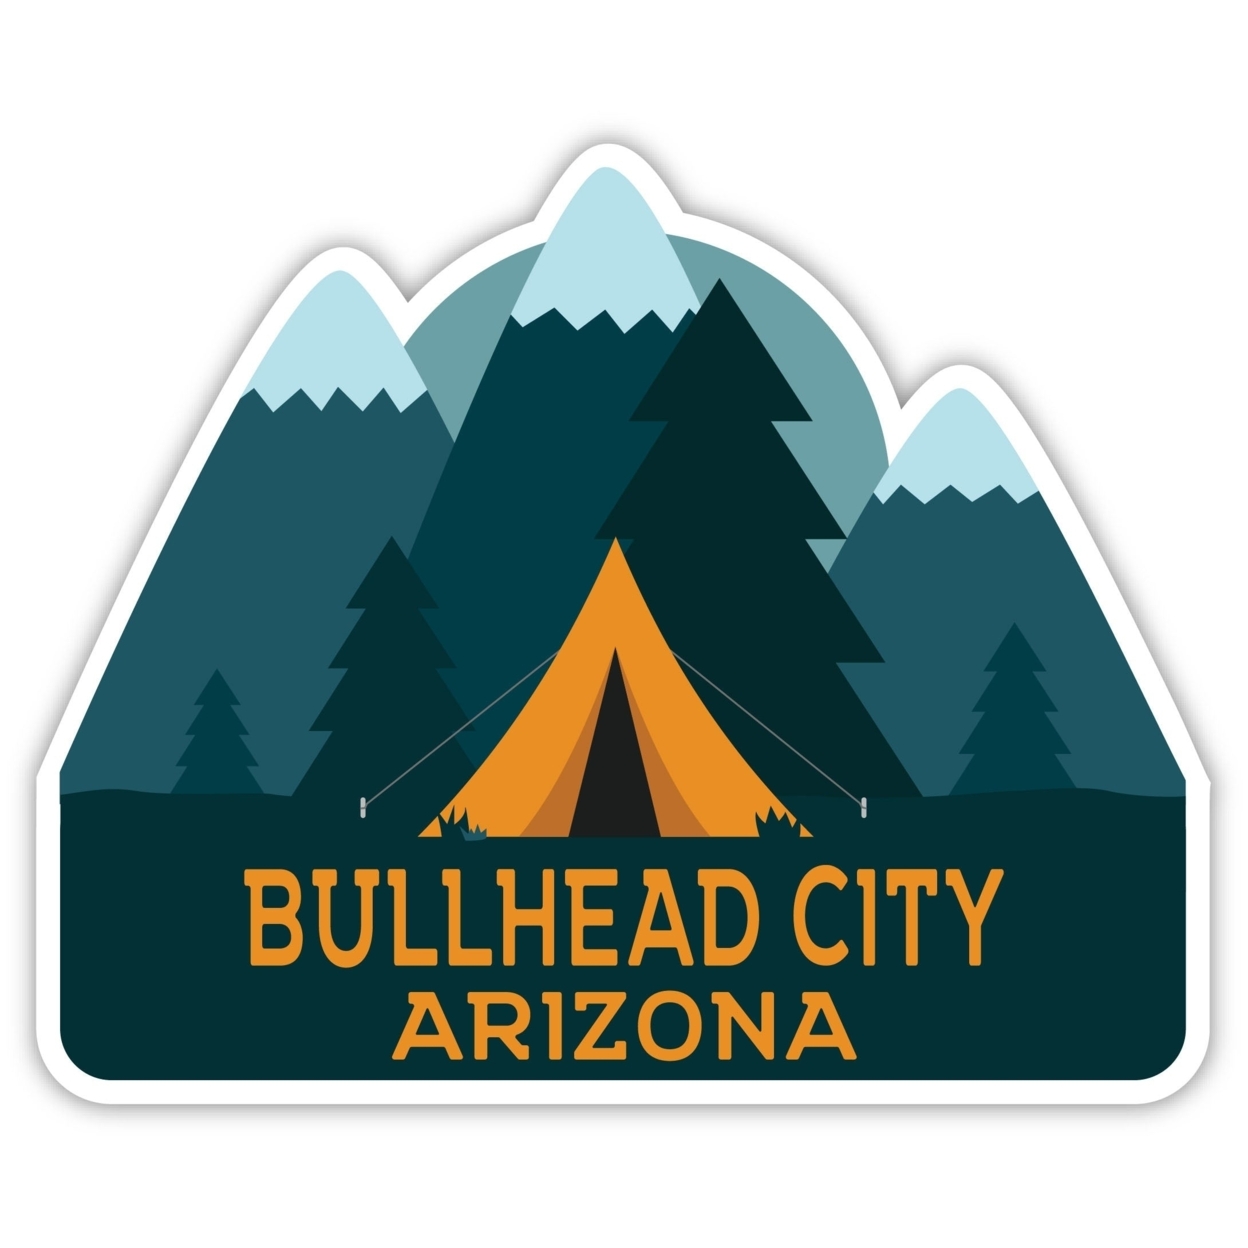 Bullhead City Arizona Souvenir Decorative Stickers (Choose Theme And Size) - 4-Pack, 2-Inch, Camp Life